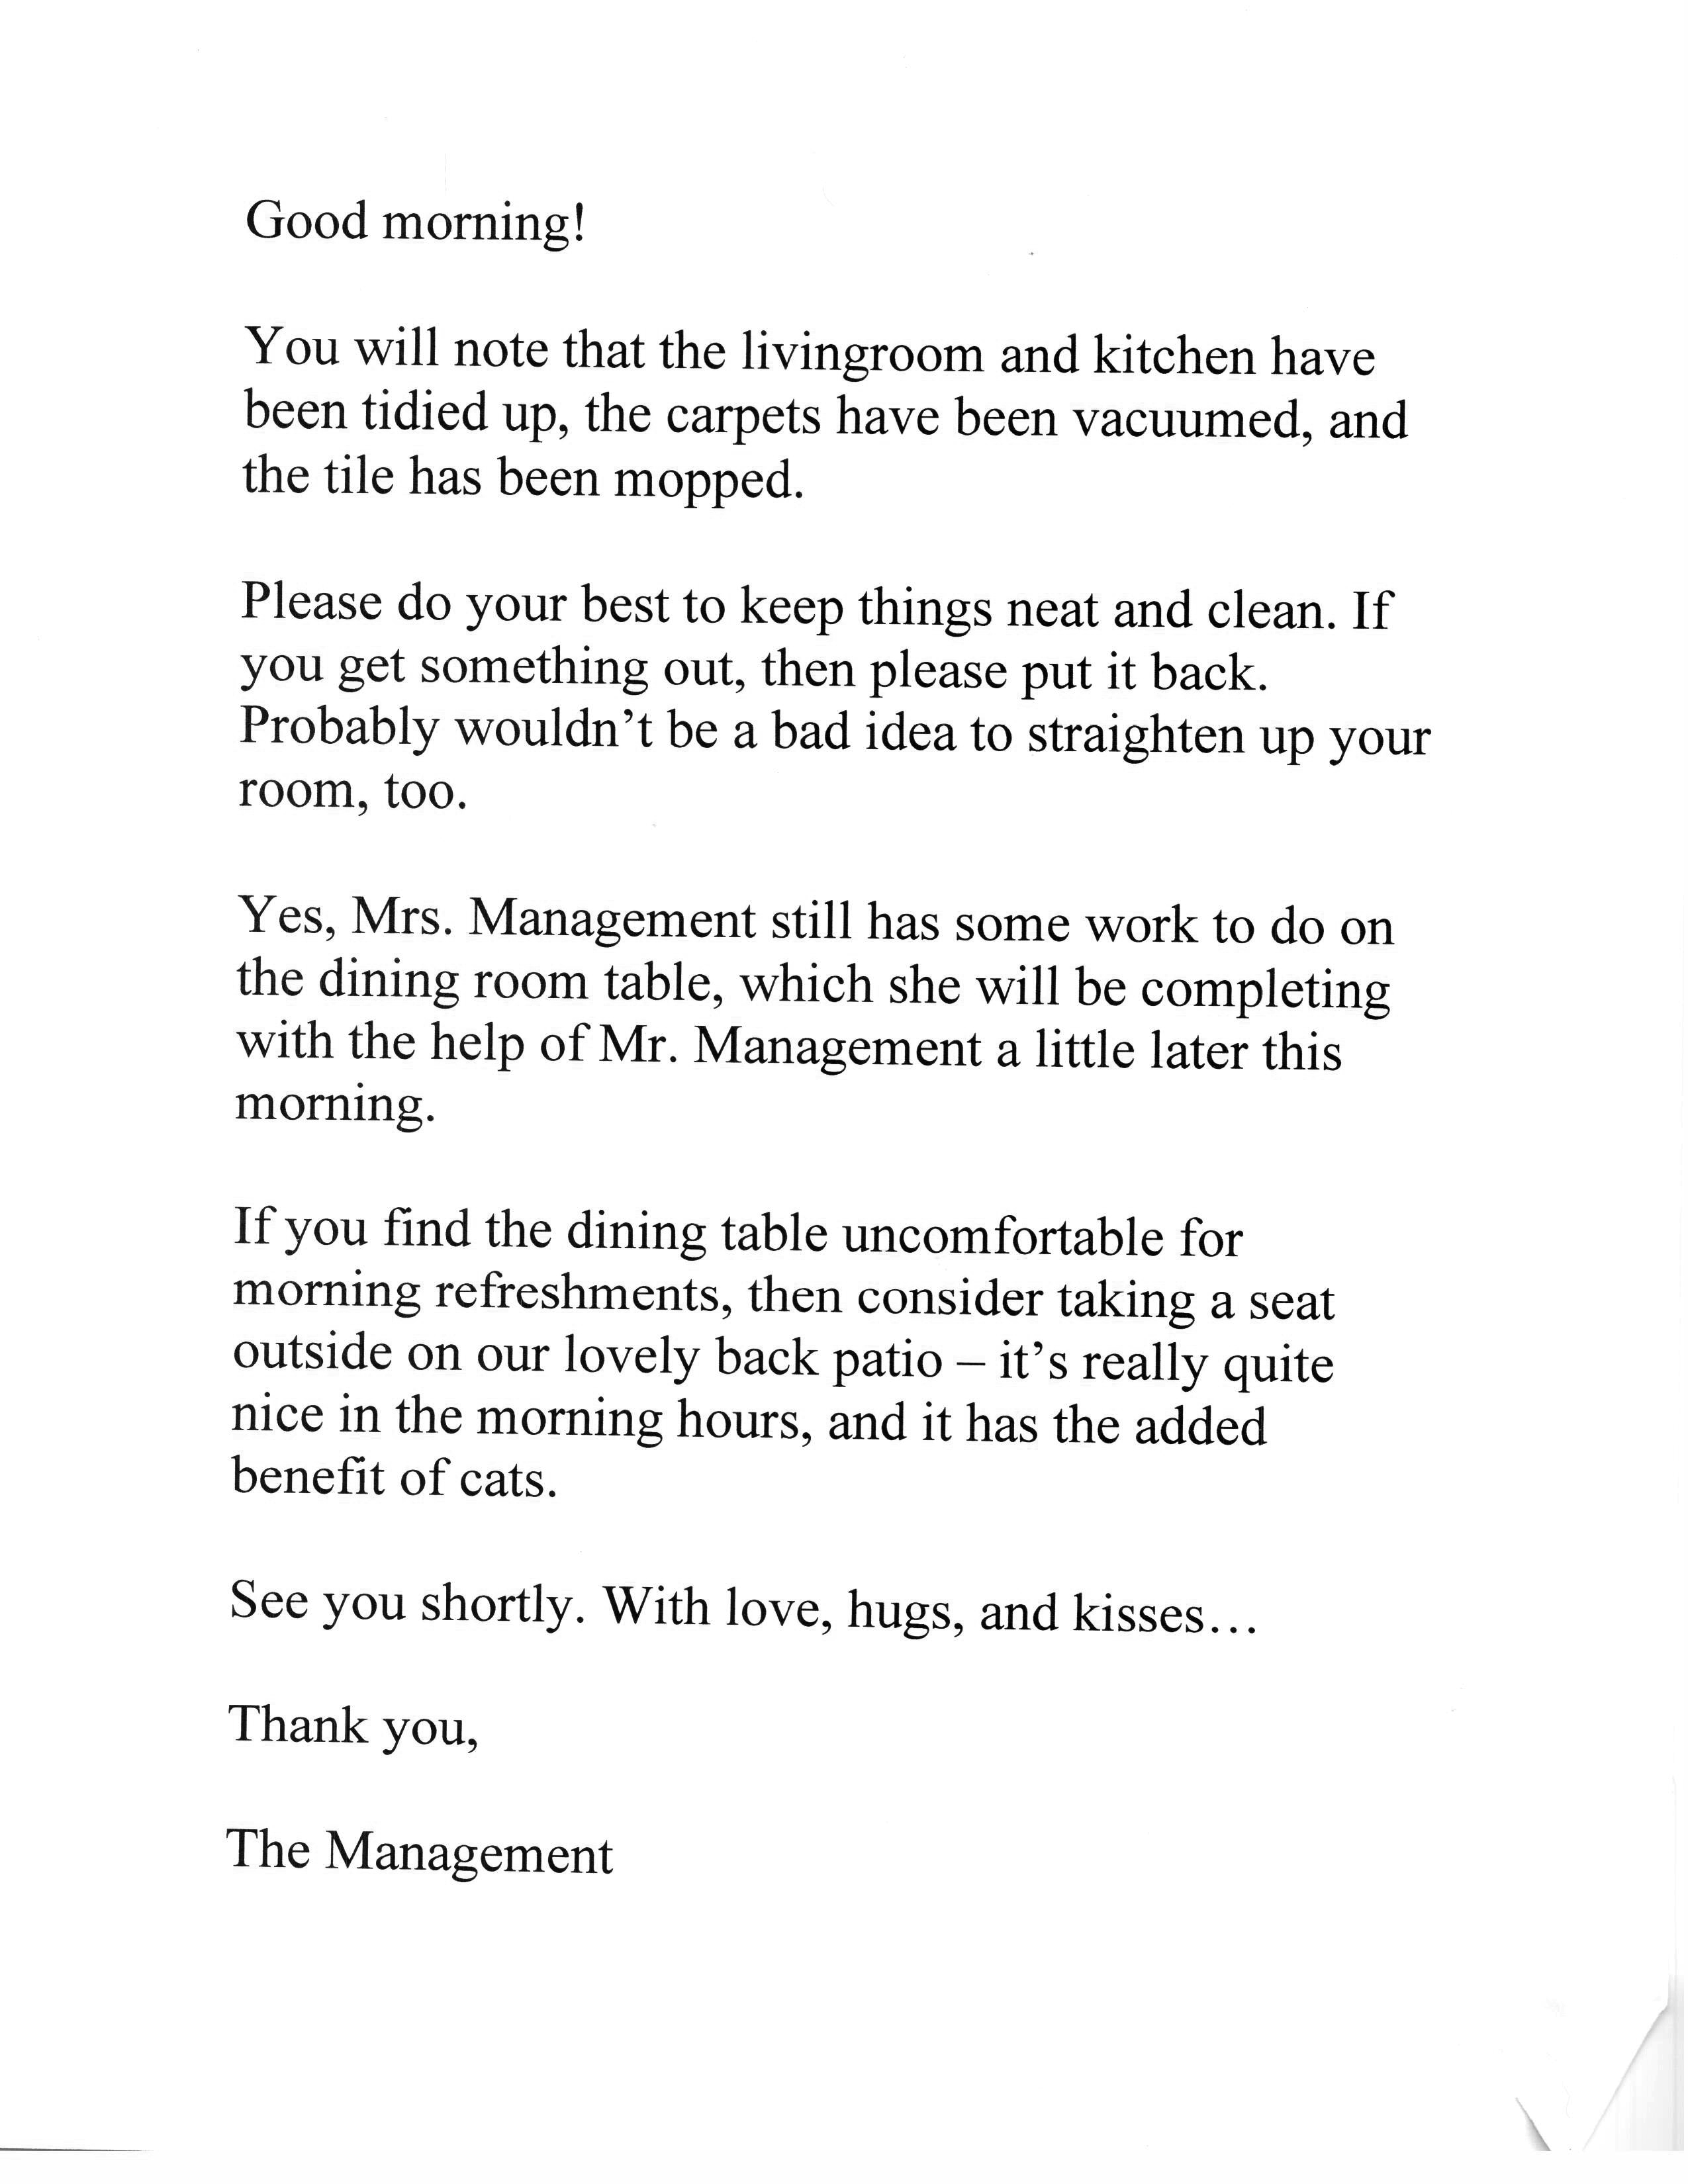 Mr. Management